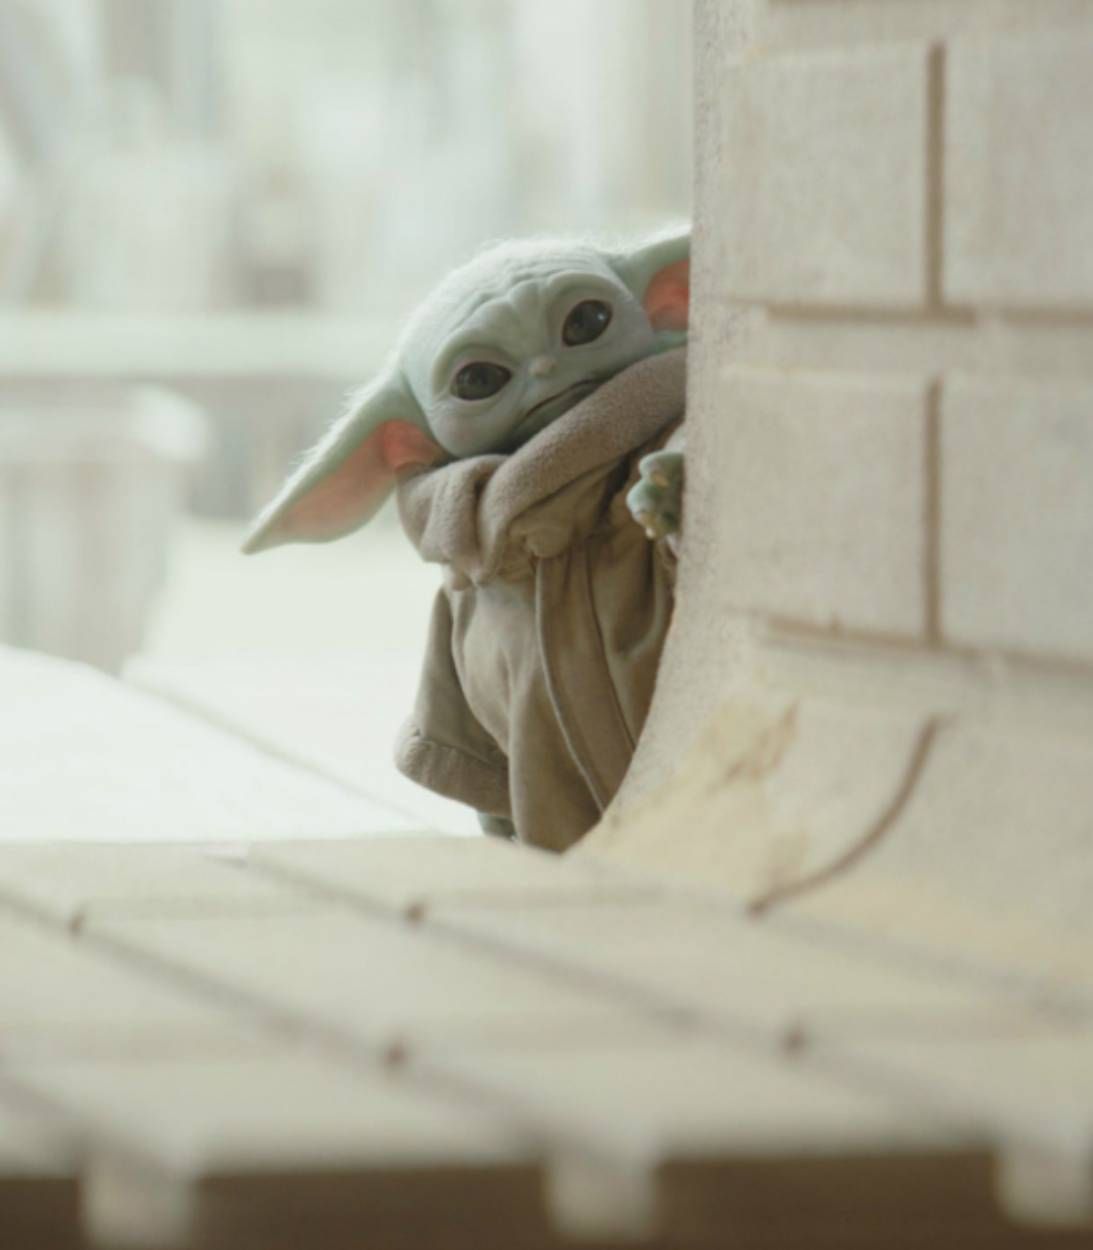 Baby Yoda in The Mandalorian Season 2 Episode 1 pic vertical